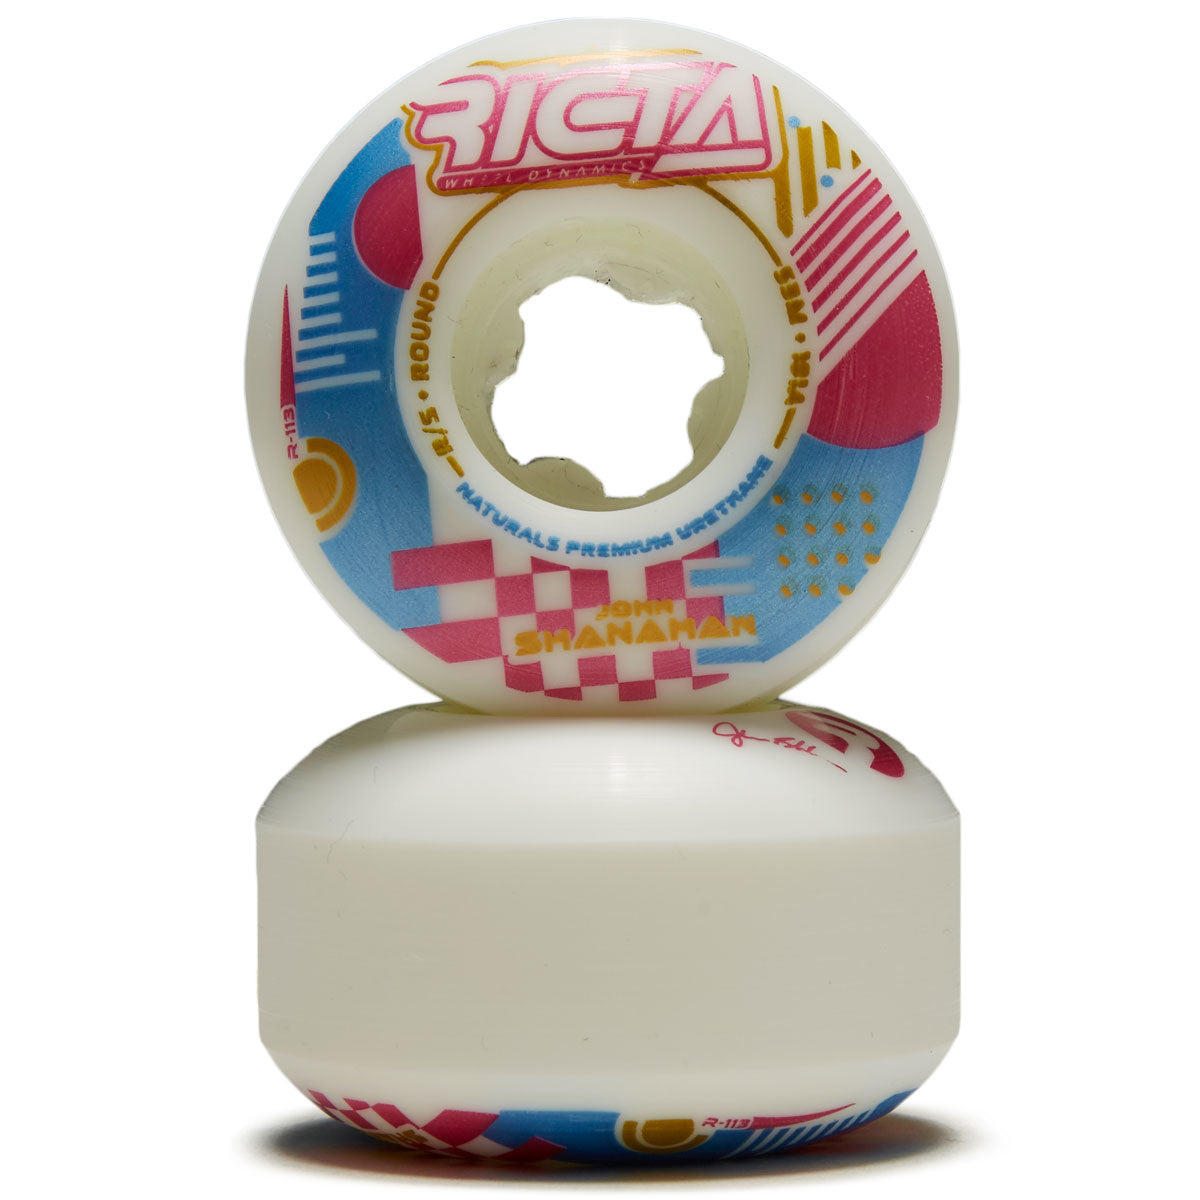 Ricta Shanahan Flux Naturals Round 101a Skateboard Wheels - White - 53mm image 2